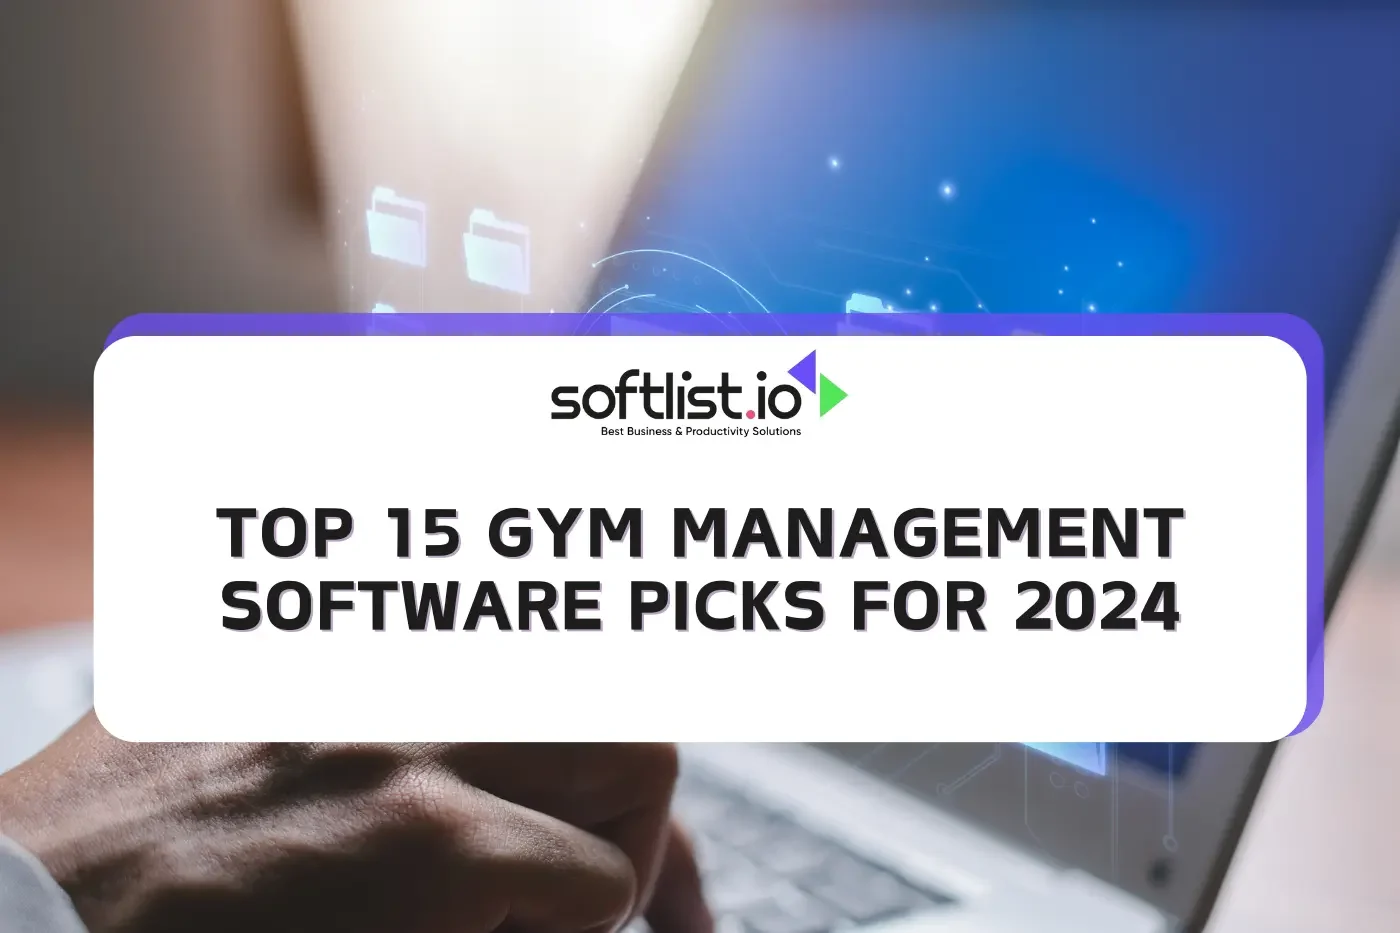 Top 15 Gym Management Software Picks for 2024